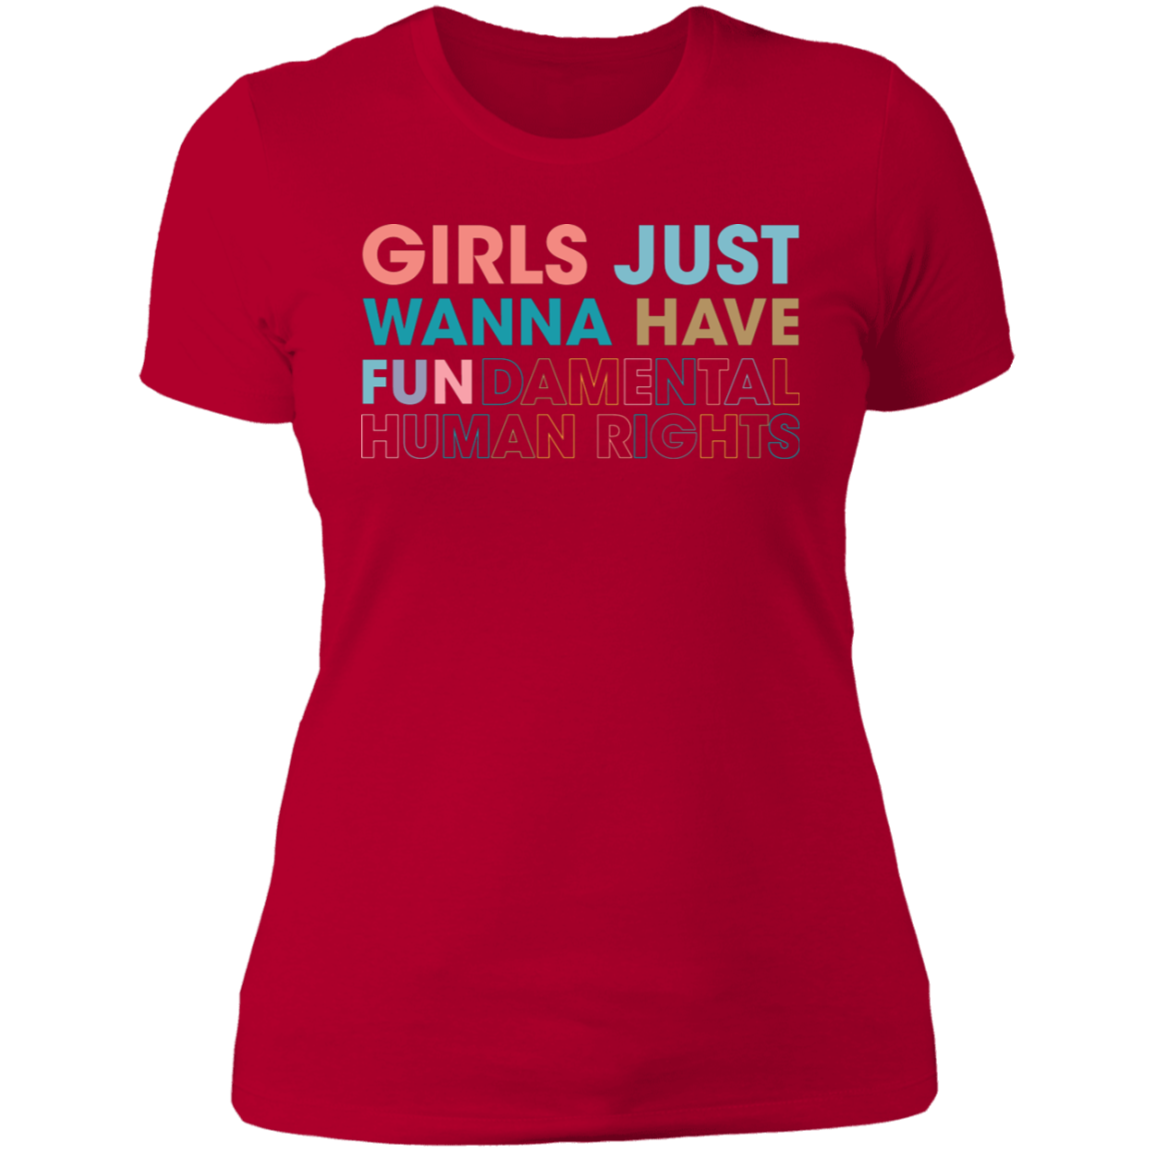 Girls Just Wanna Have Fundamental Human Rights T-shirt